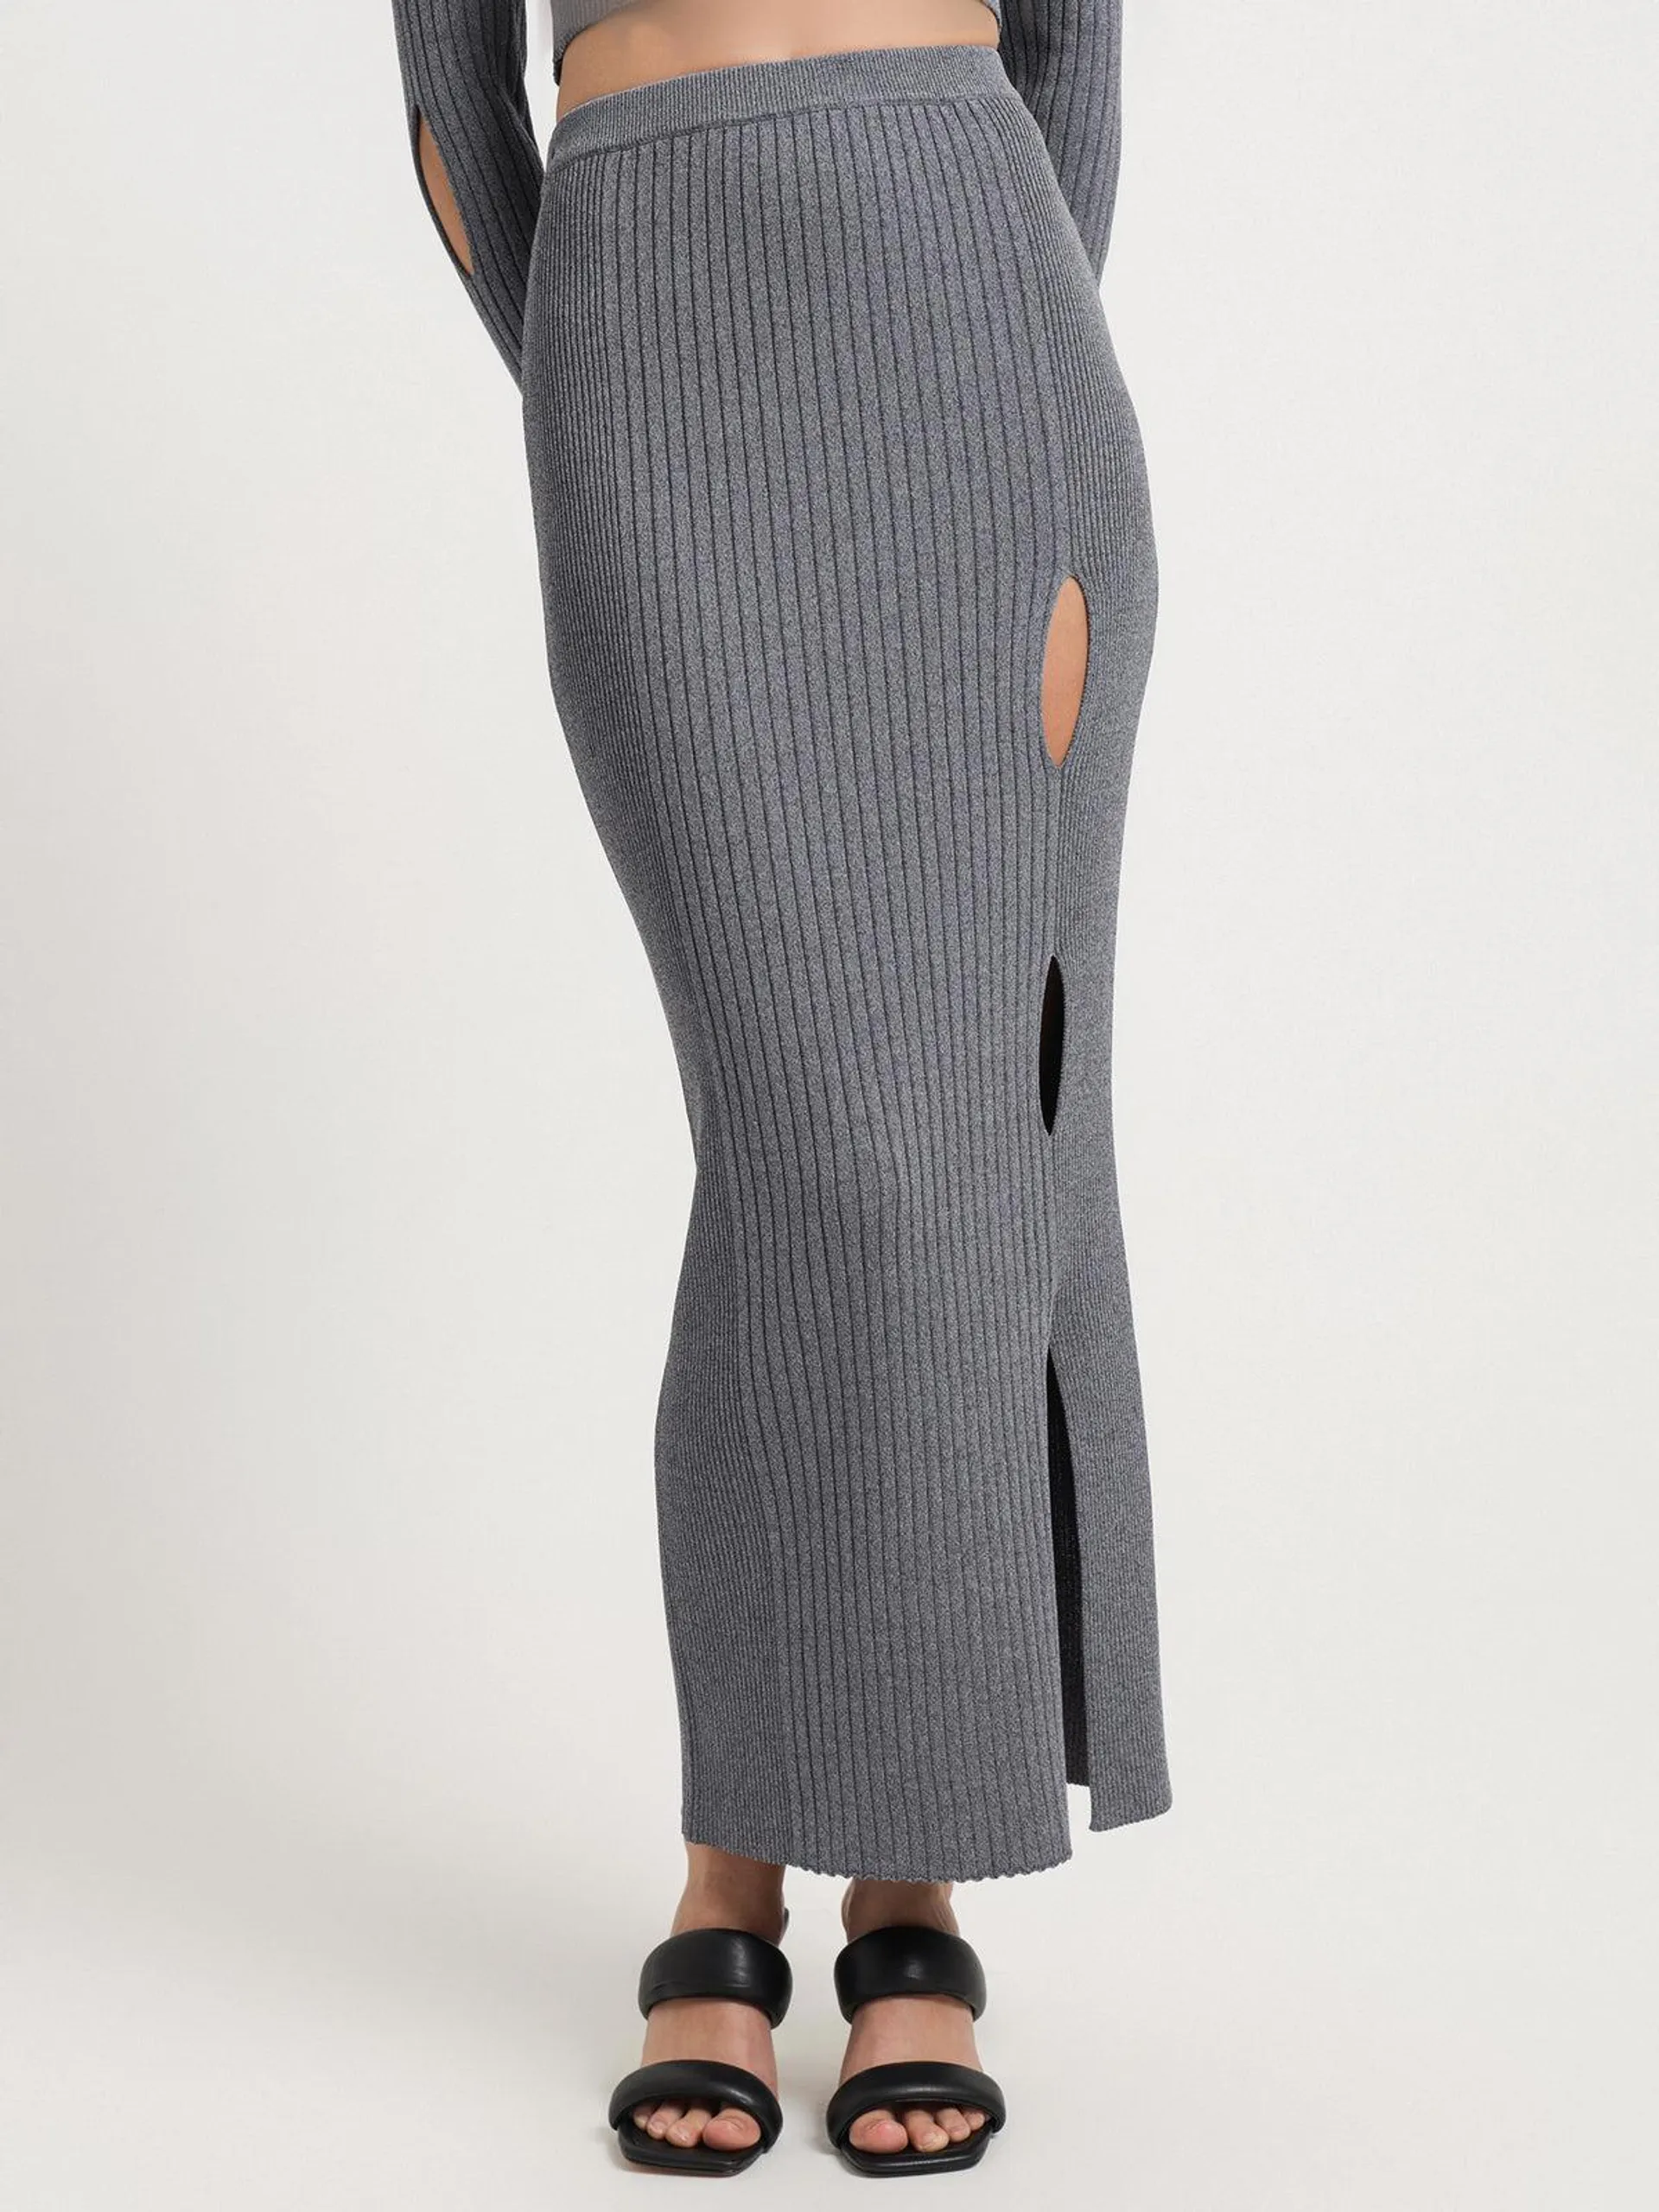 Kaesha Knit Midi Skirt in Grey Marle